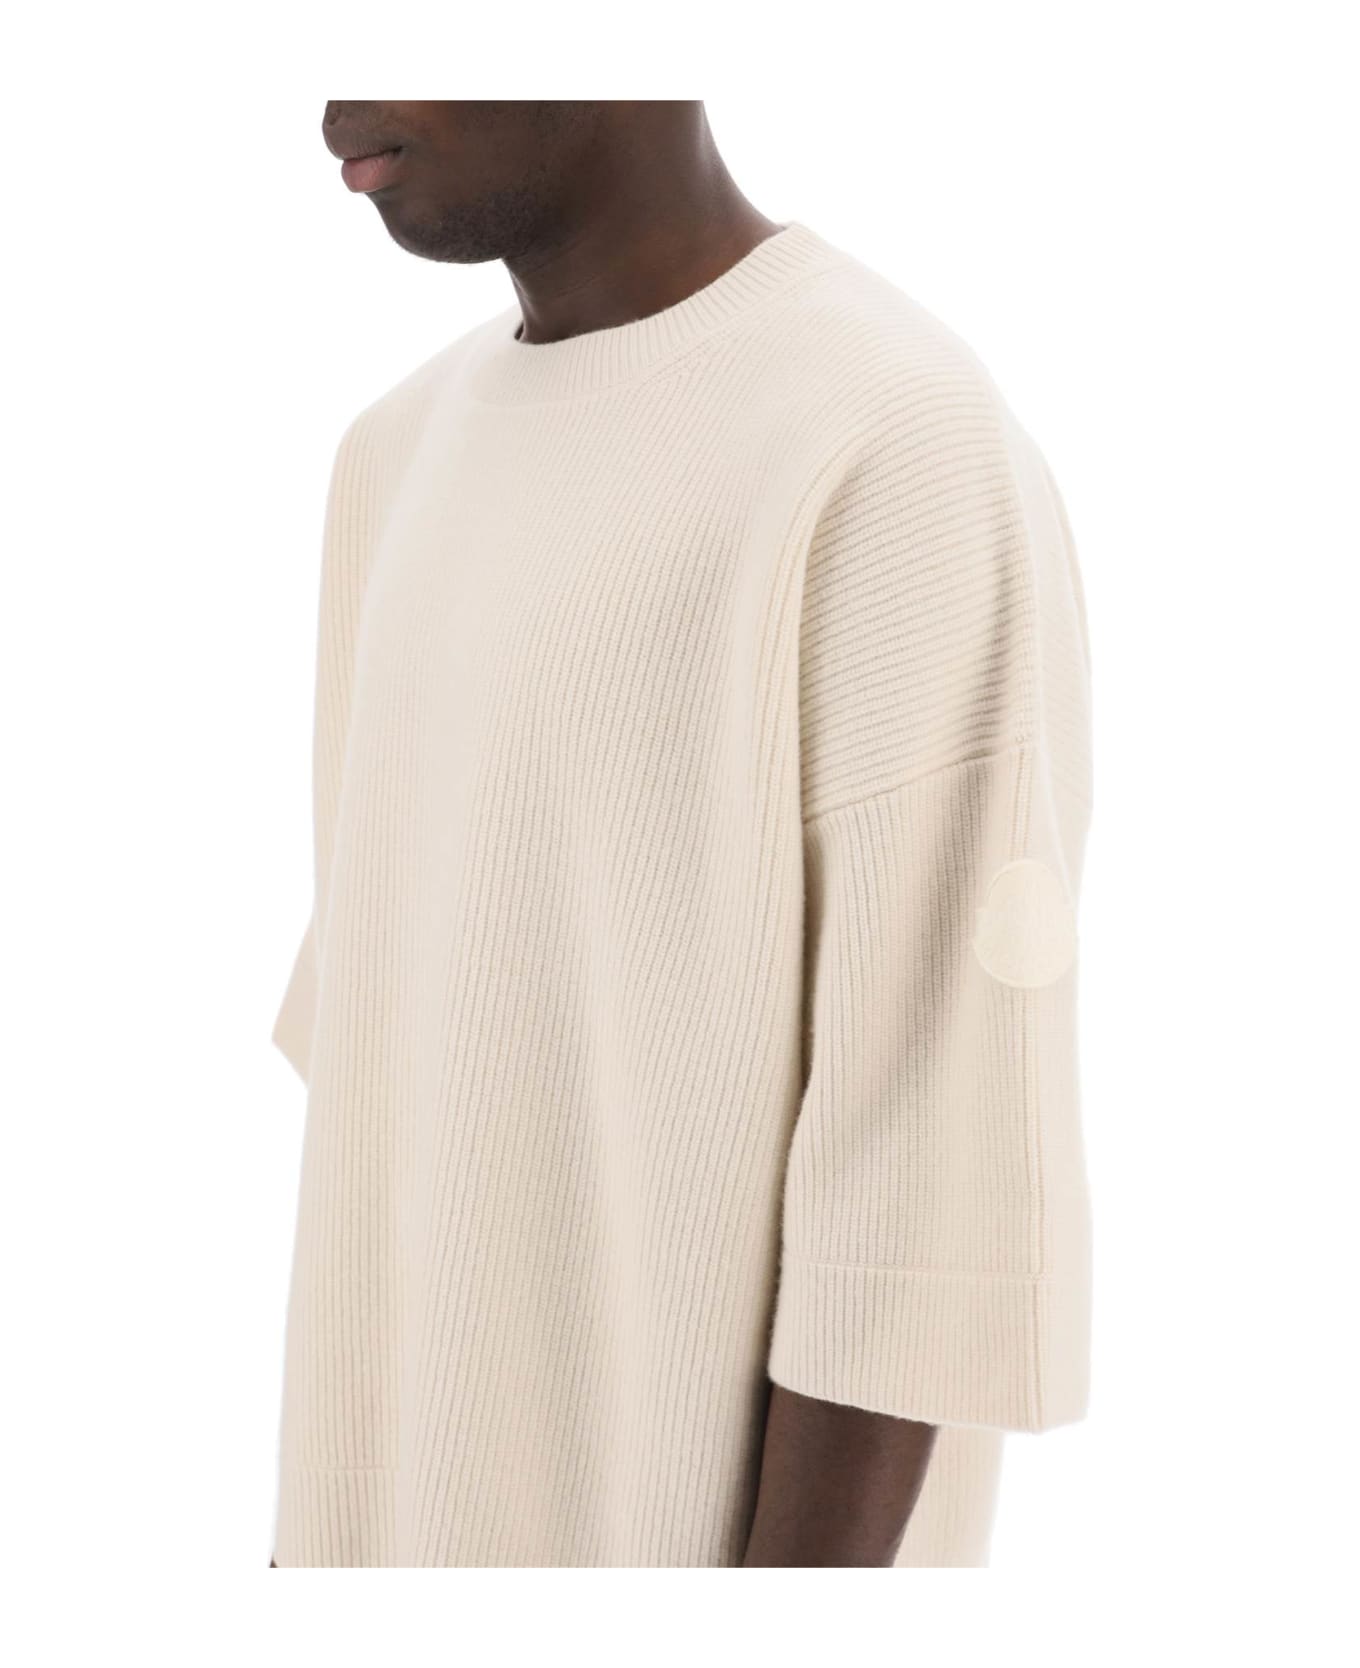 Moncler Genius Moncler X Roc Nation Designed By Jay-z - Virgin Wool Crew-neck Sweater - White ニットウェア